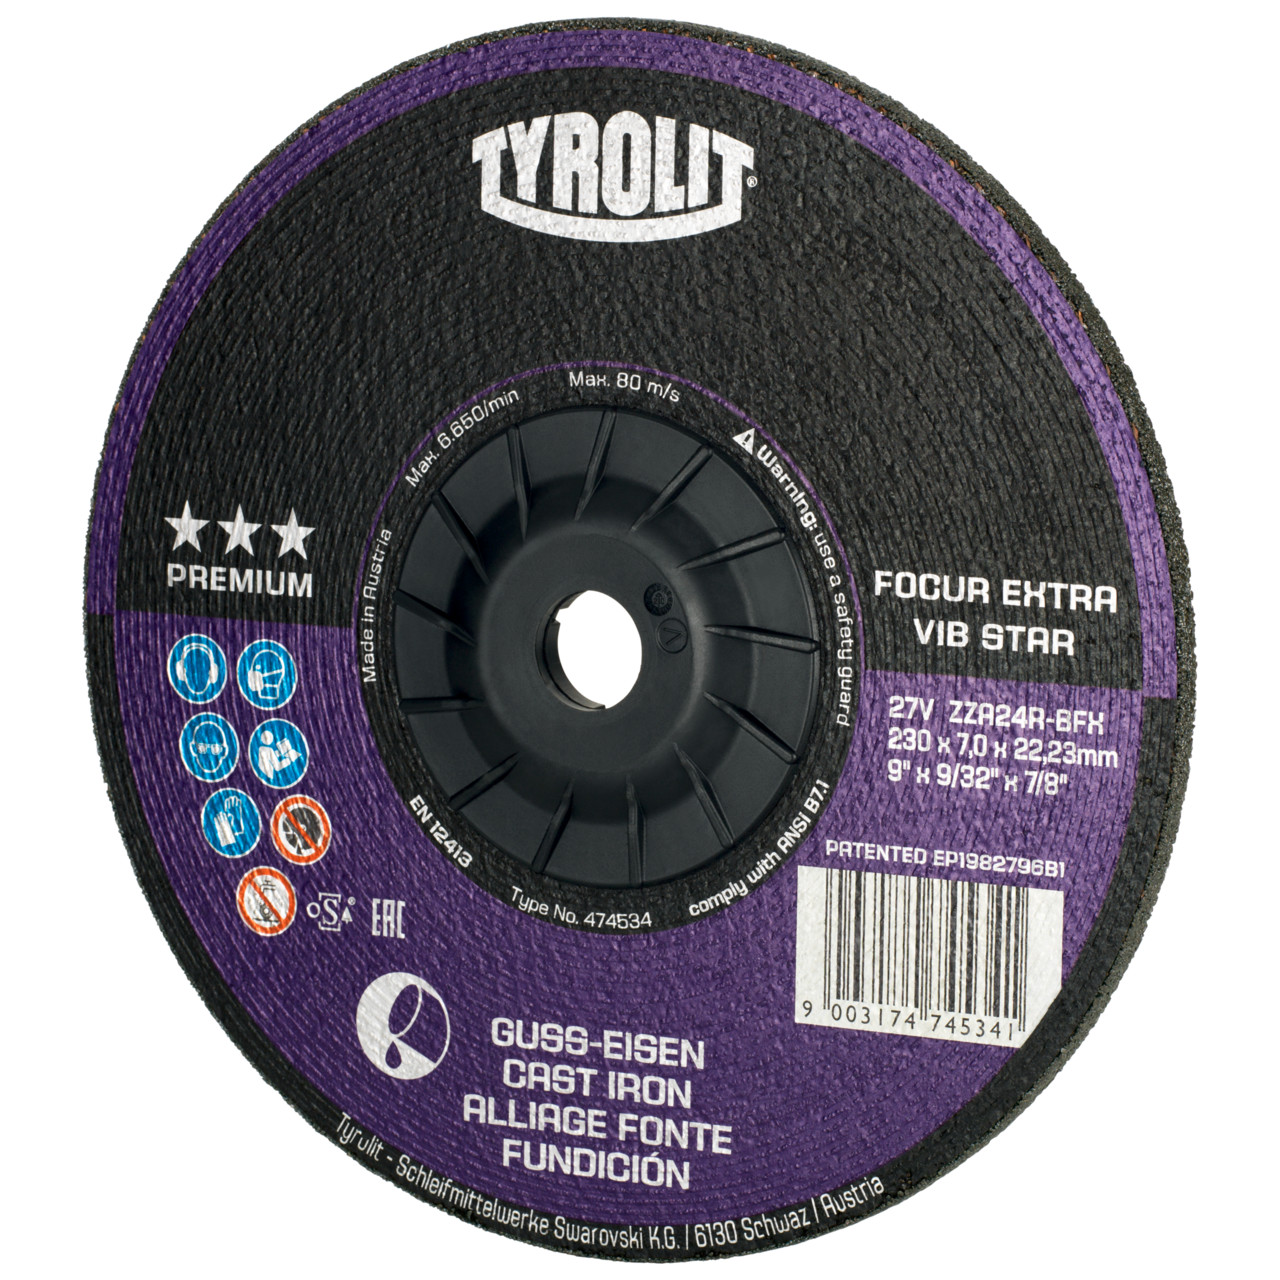 TYROLIT grinding wheel DxUxH 230x7x22.23 FOCUR Extra Vibstar for cast iron, shape: 27 - offset version, Art. 474534